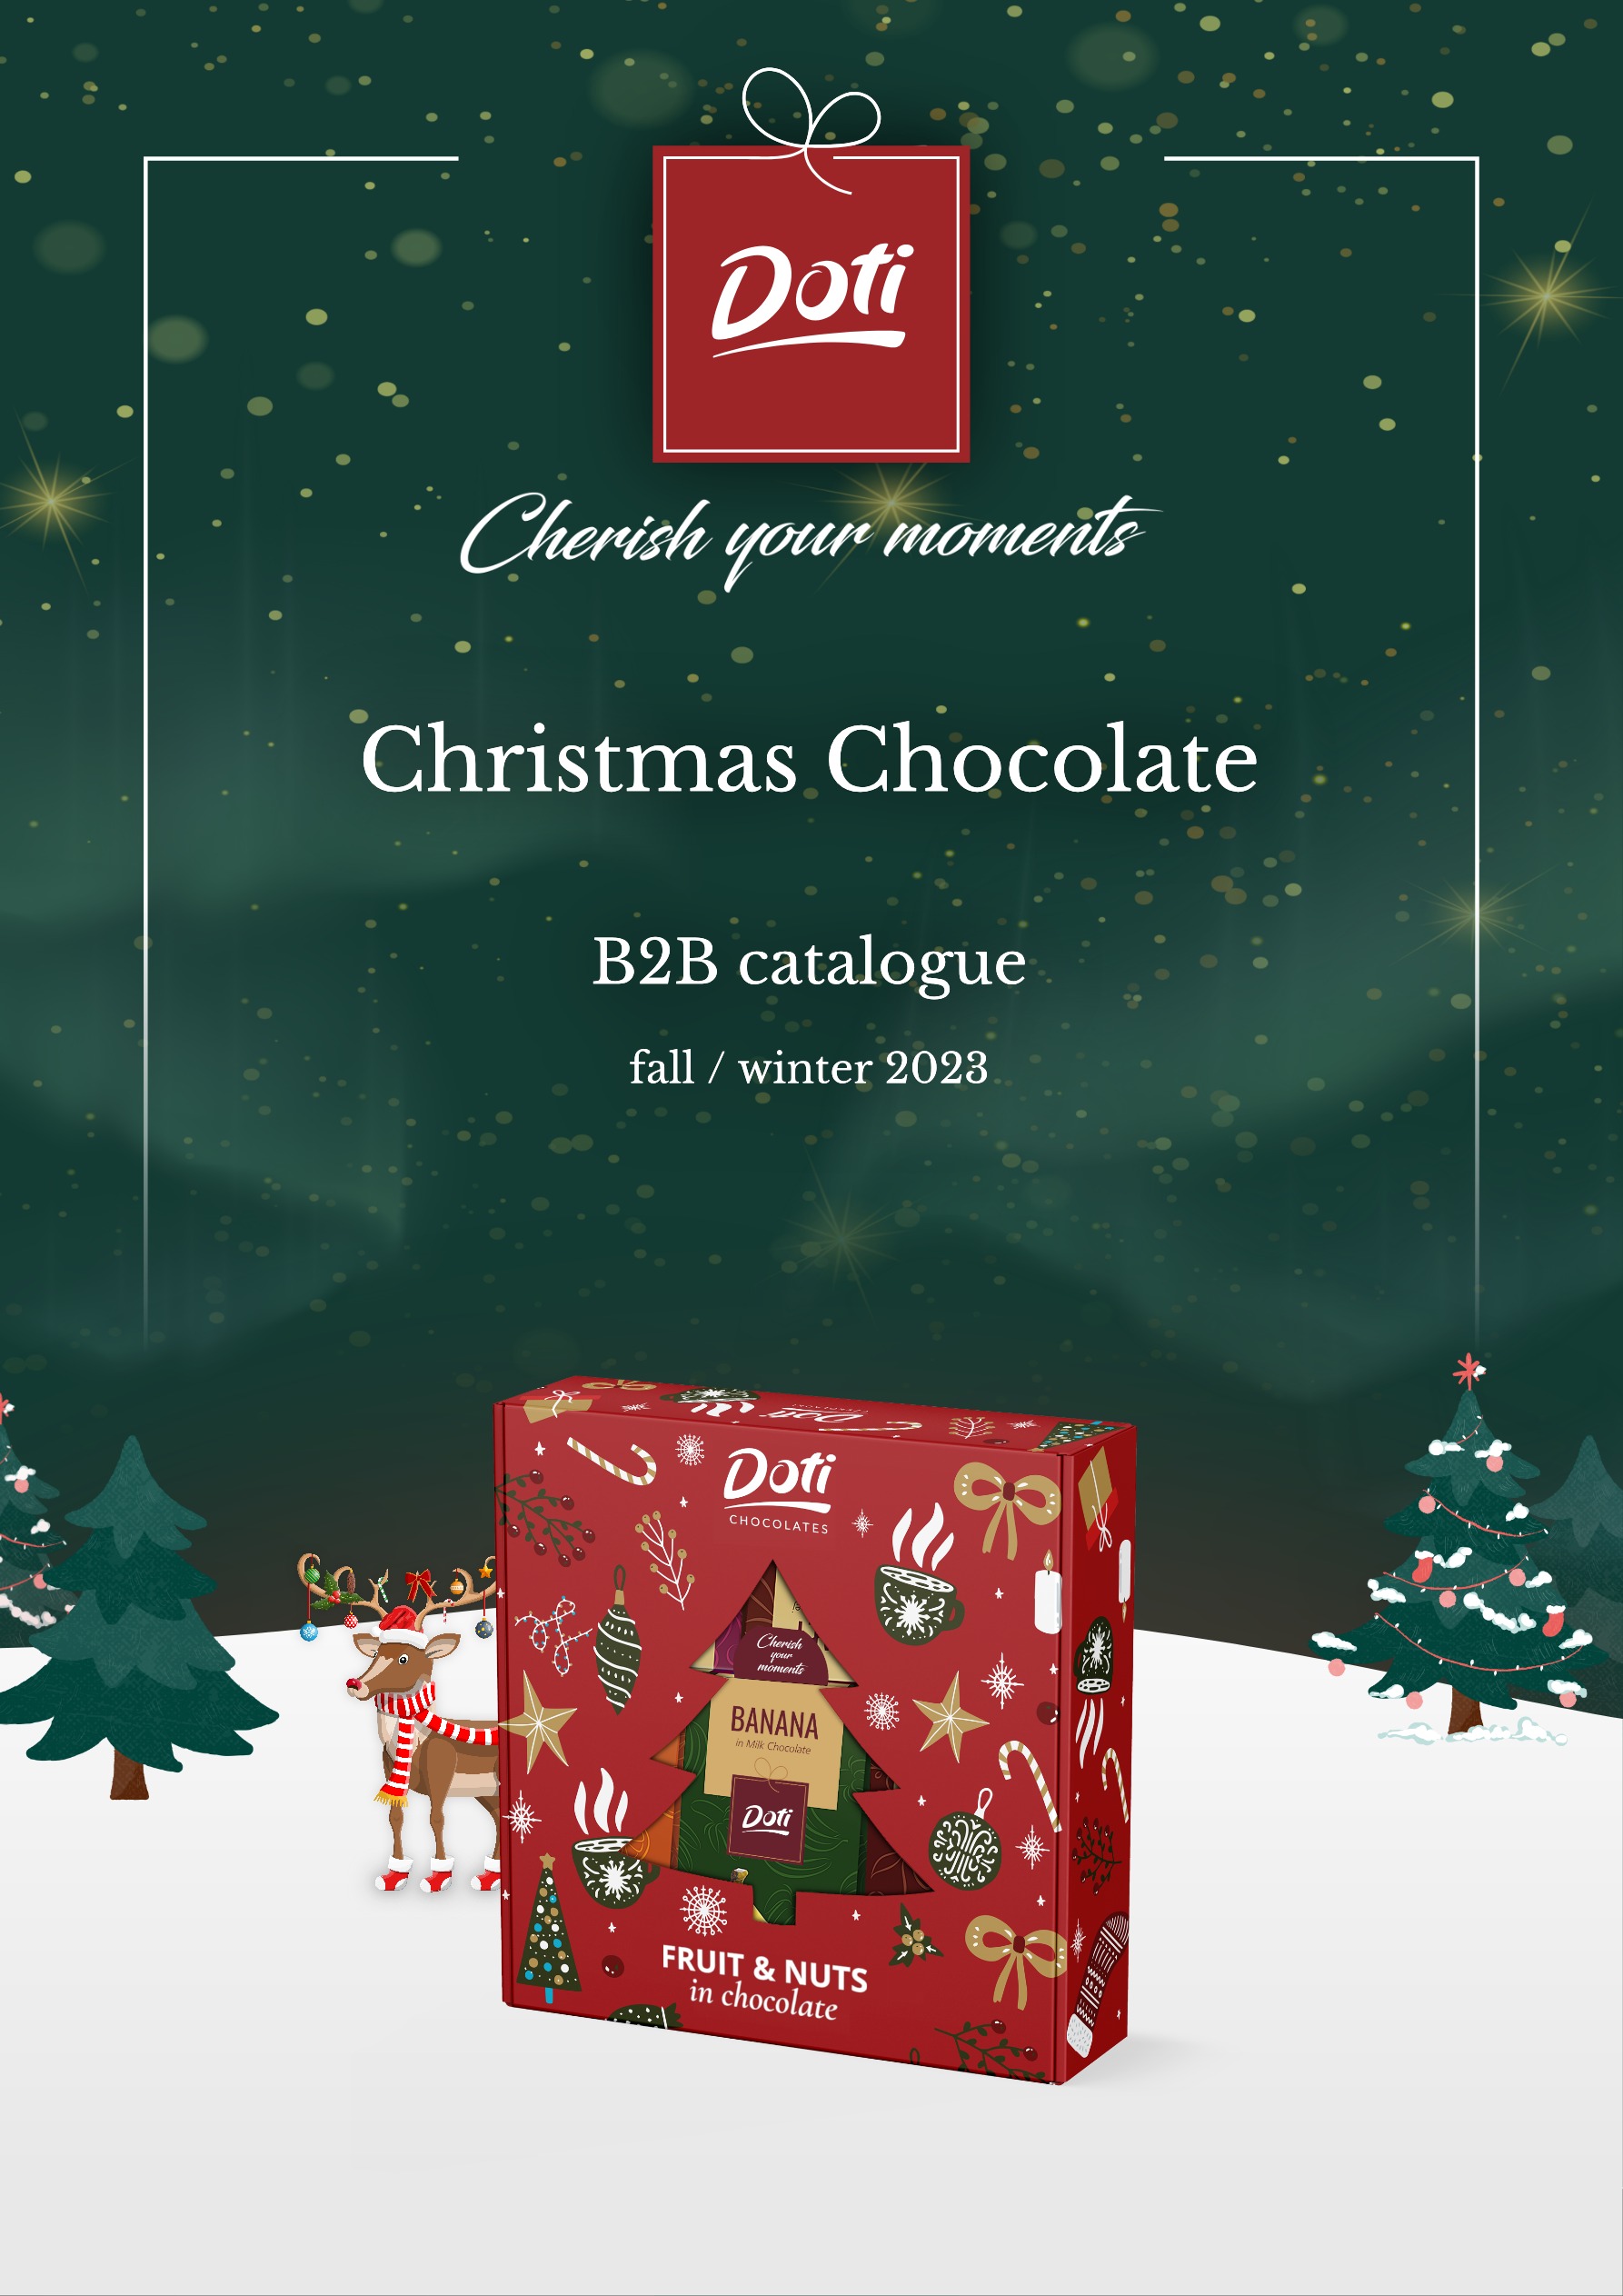 Doti Premium Chocolates Christmas 2023 offer